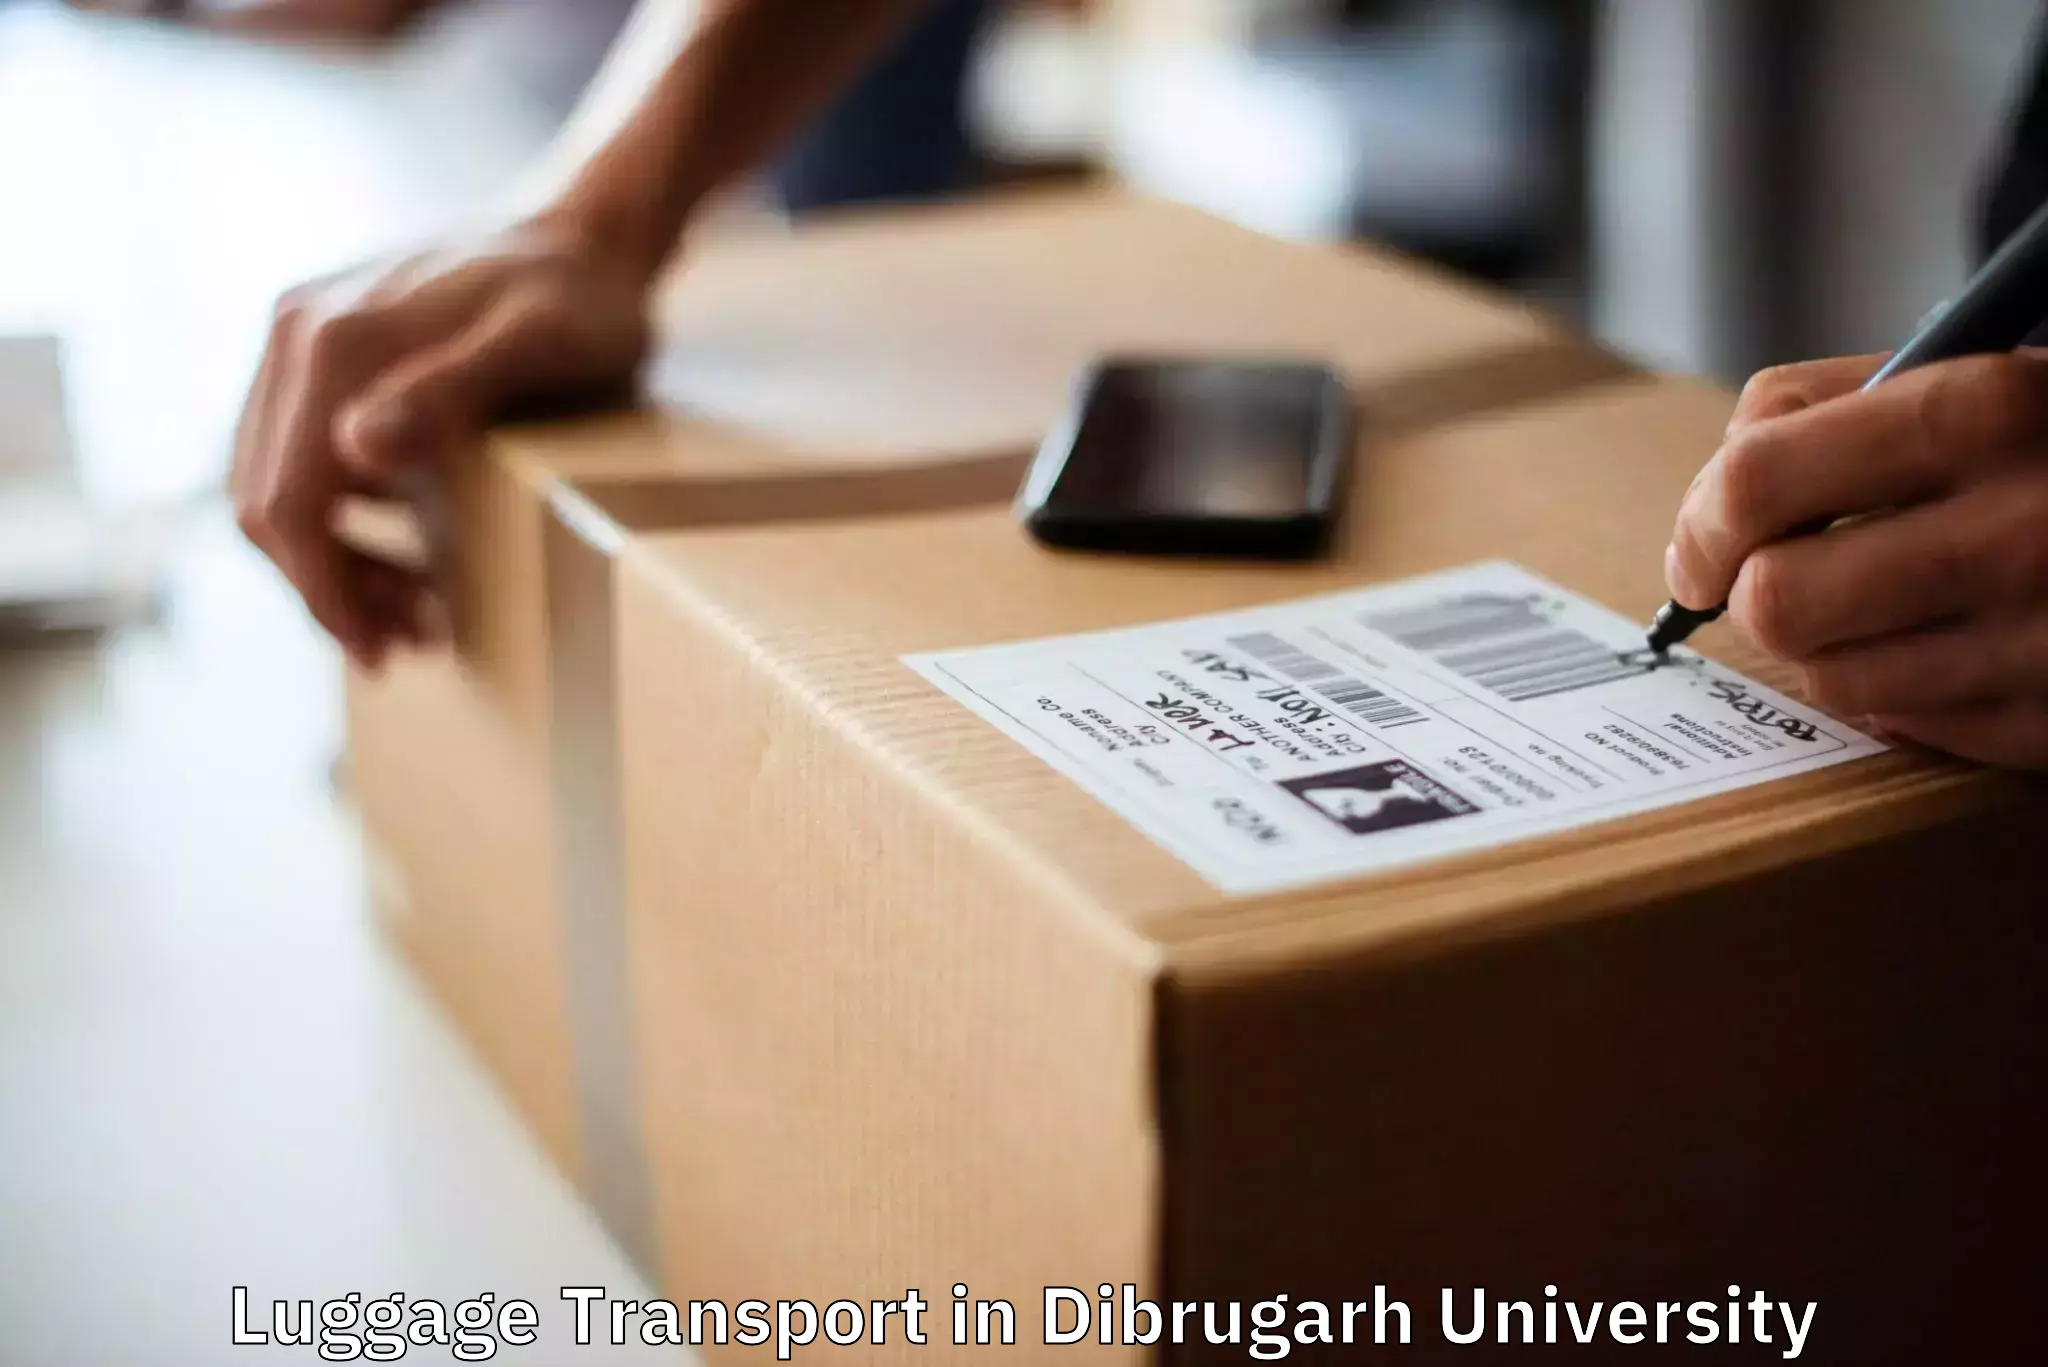 Domestic luggage transport in Dibrugarh University